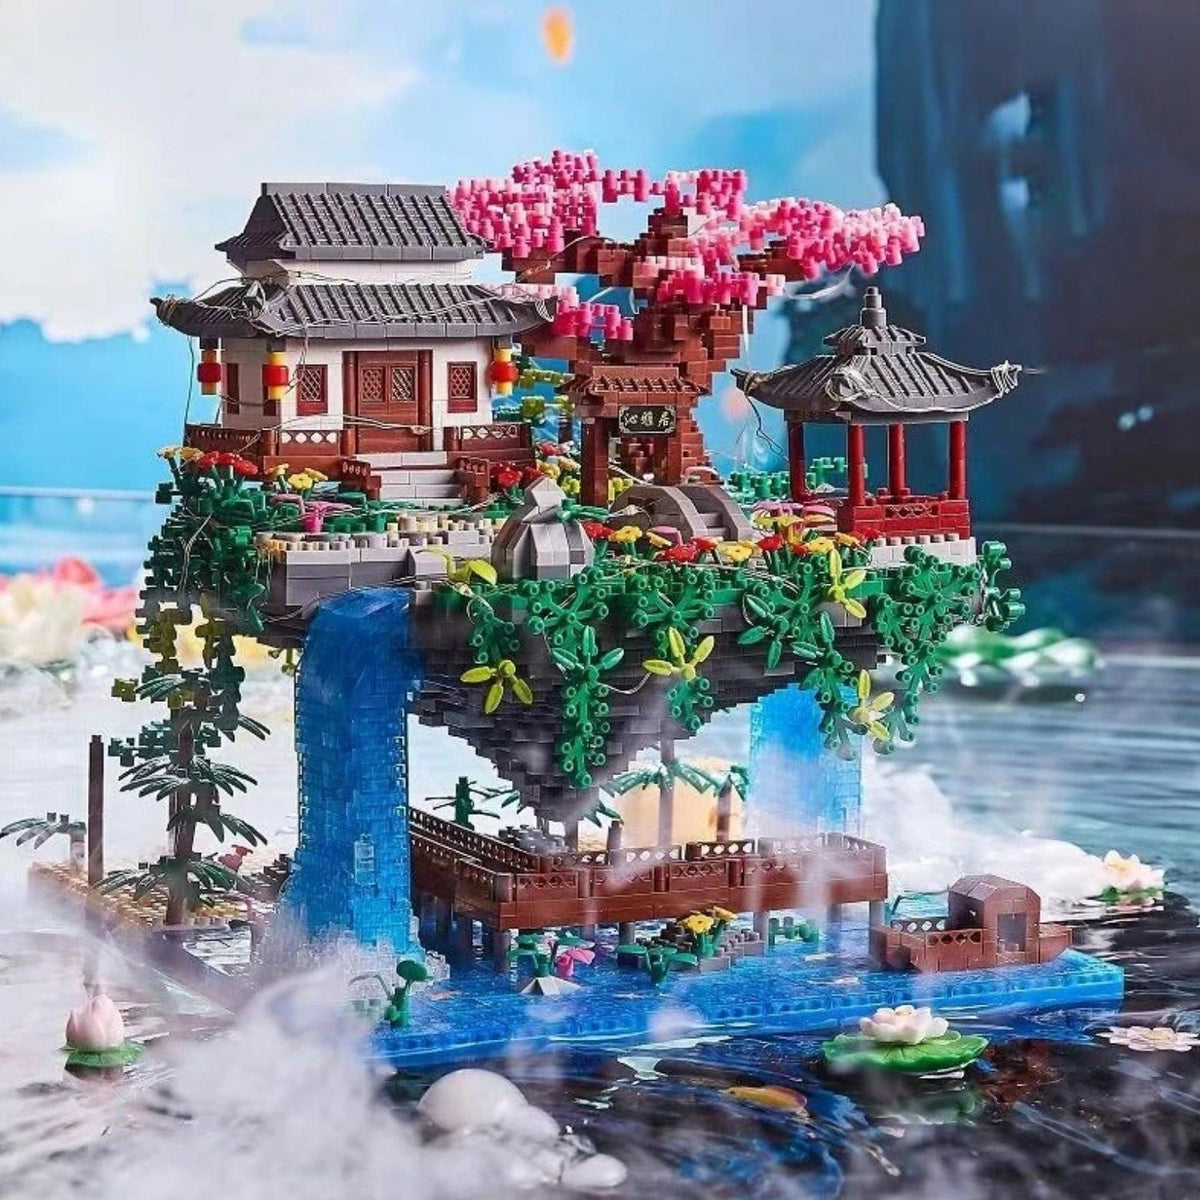 LEGO Bonsai Tree: Home Decor or Toy Photography Diorama?